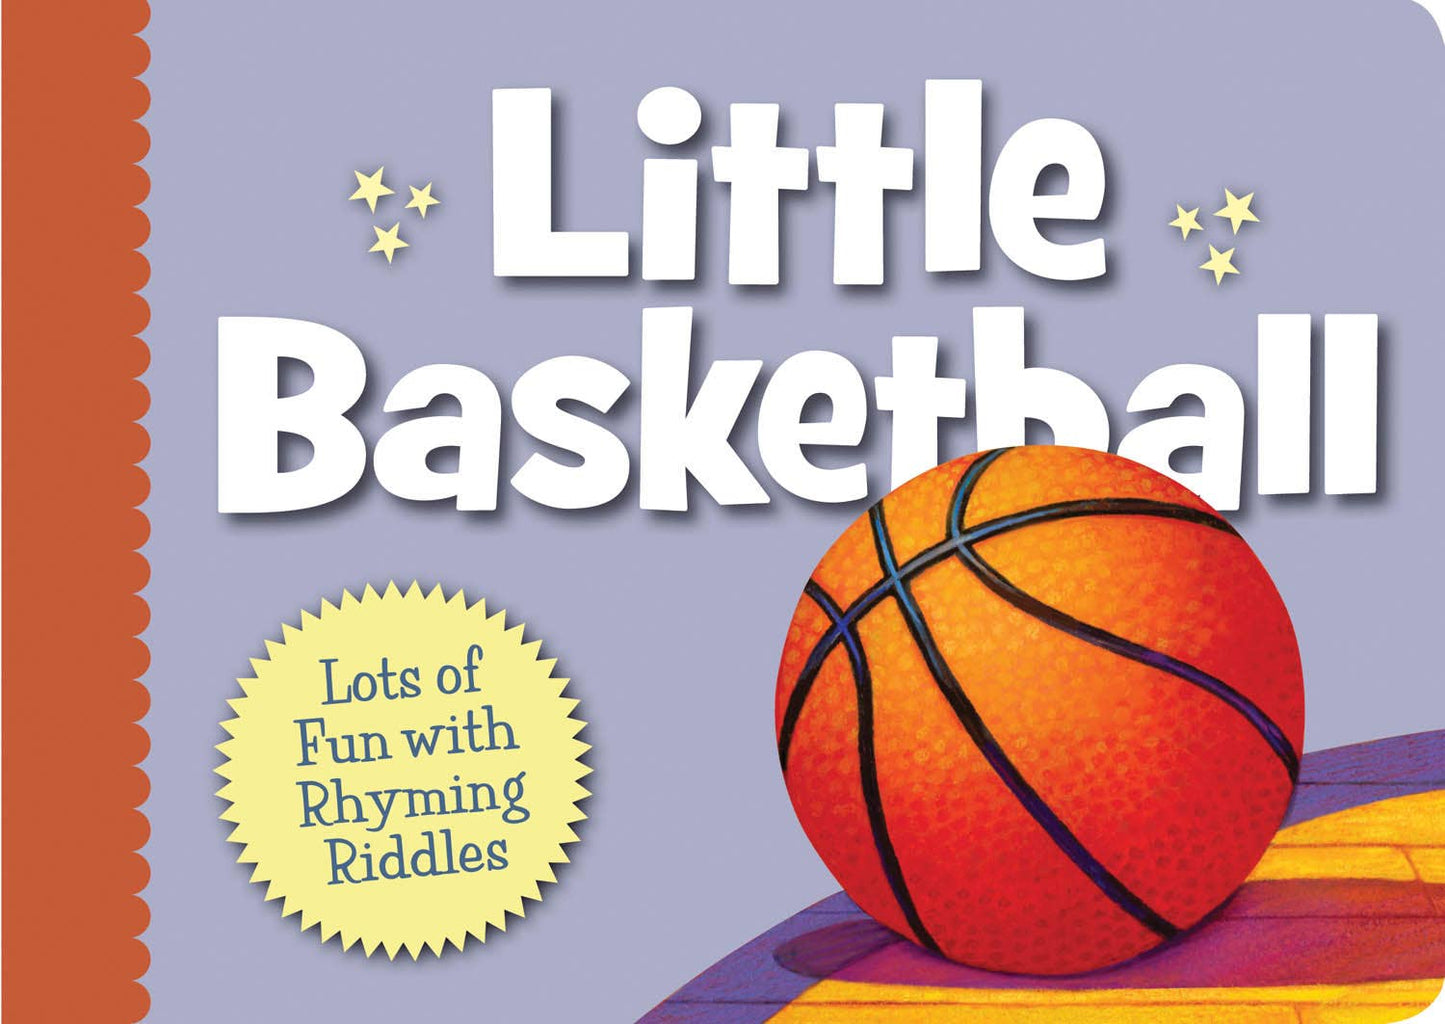 Little Basketball Board Book